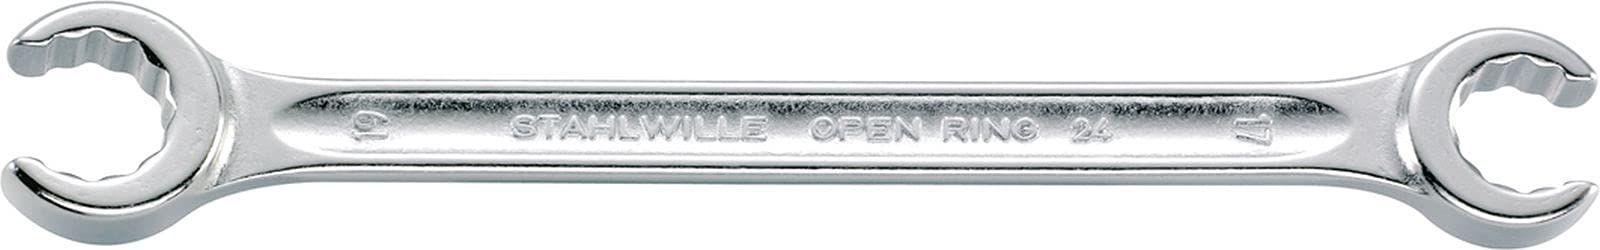 Stahlwilleスタビレー 24-30X32 オープンリングスパナ - メルカリ